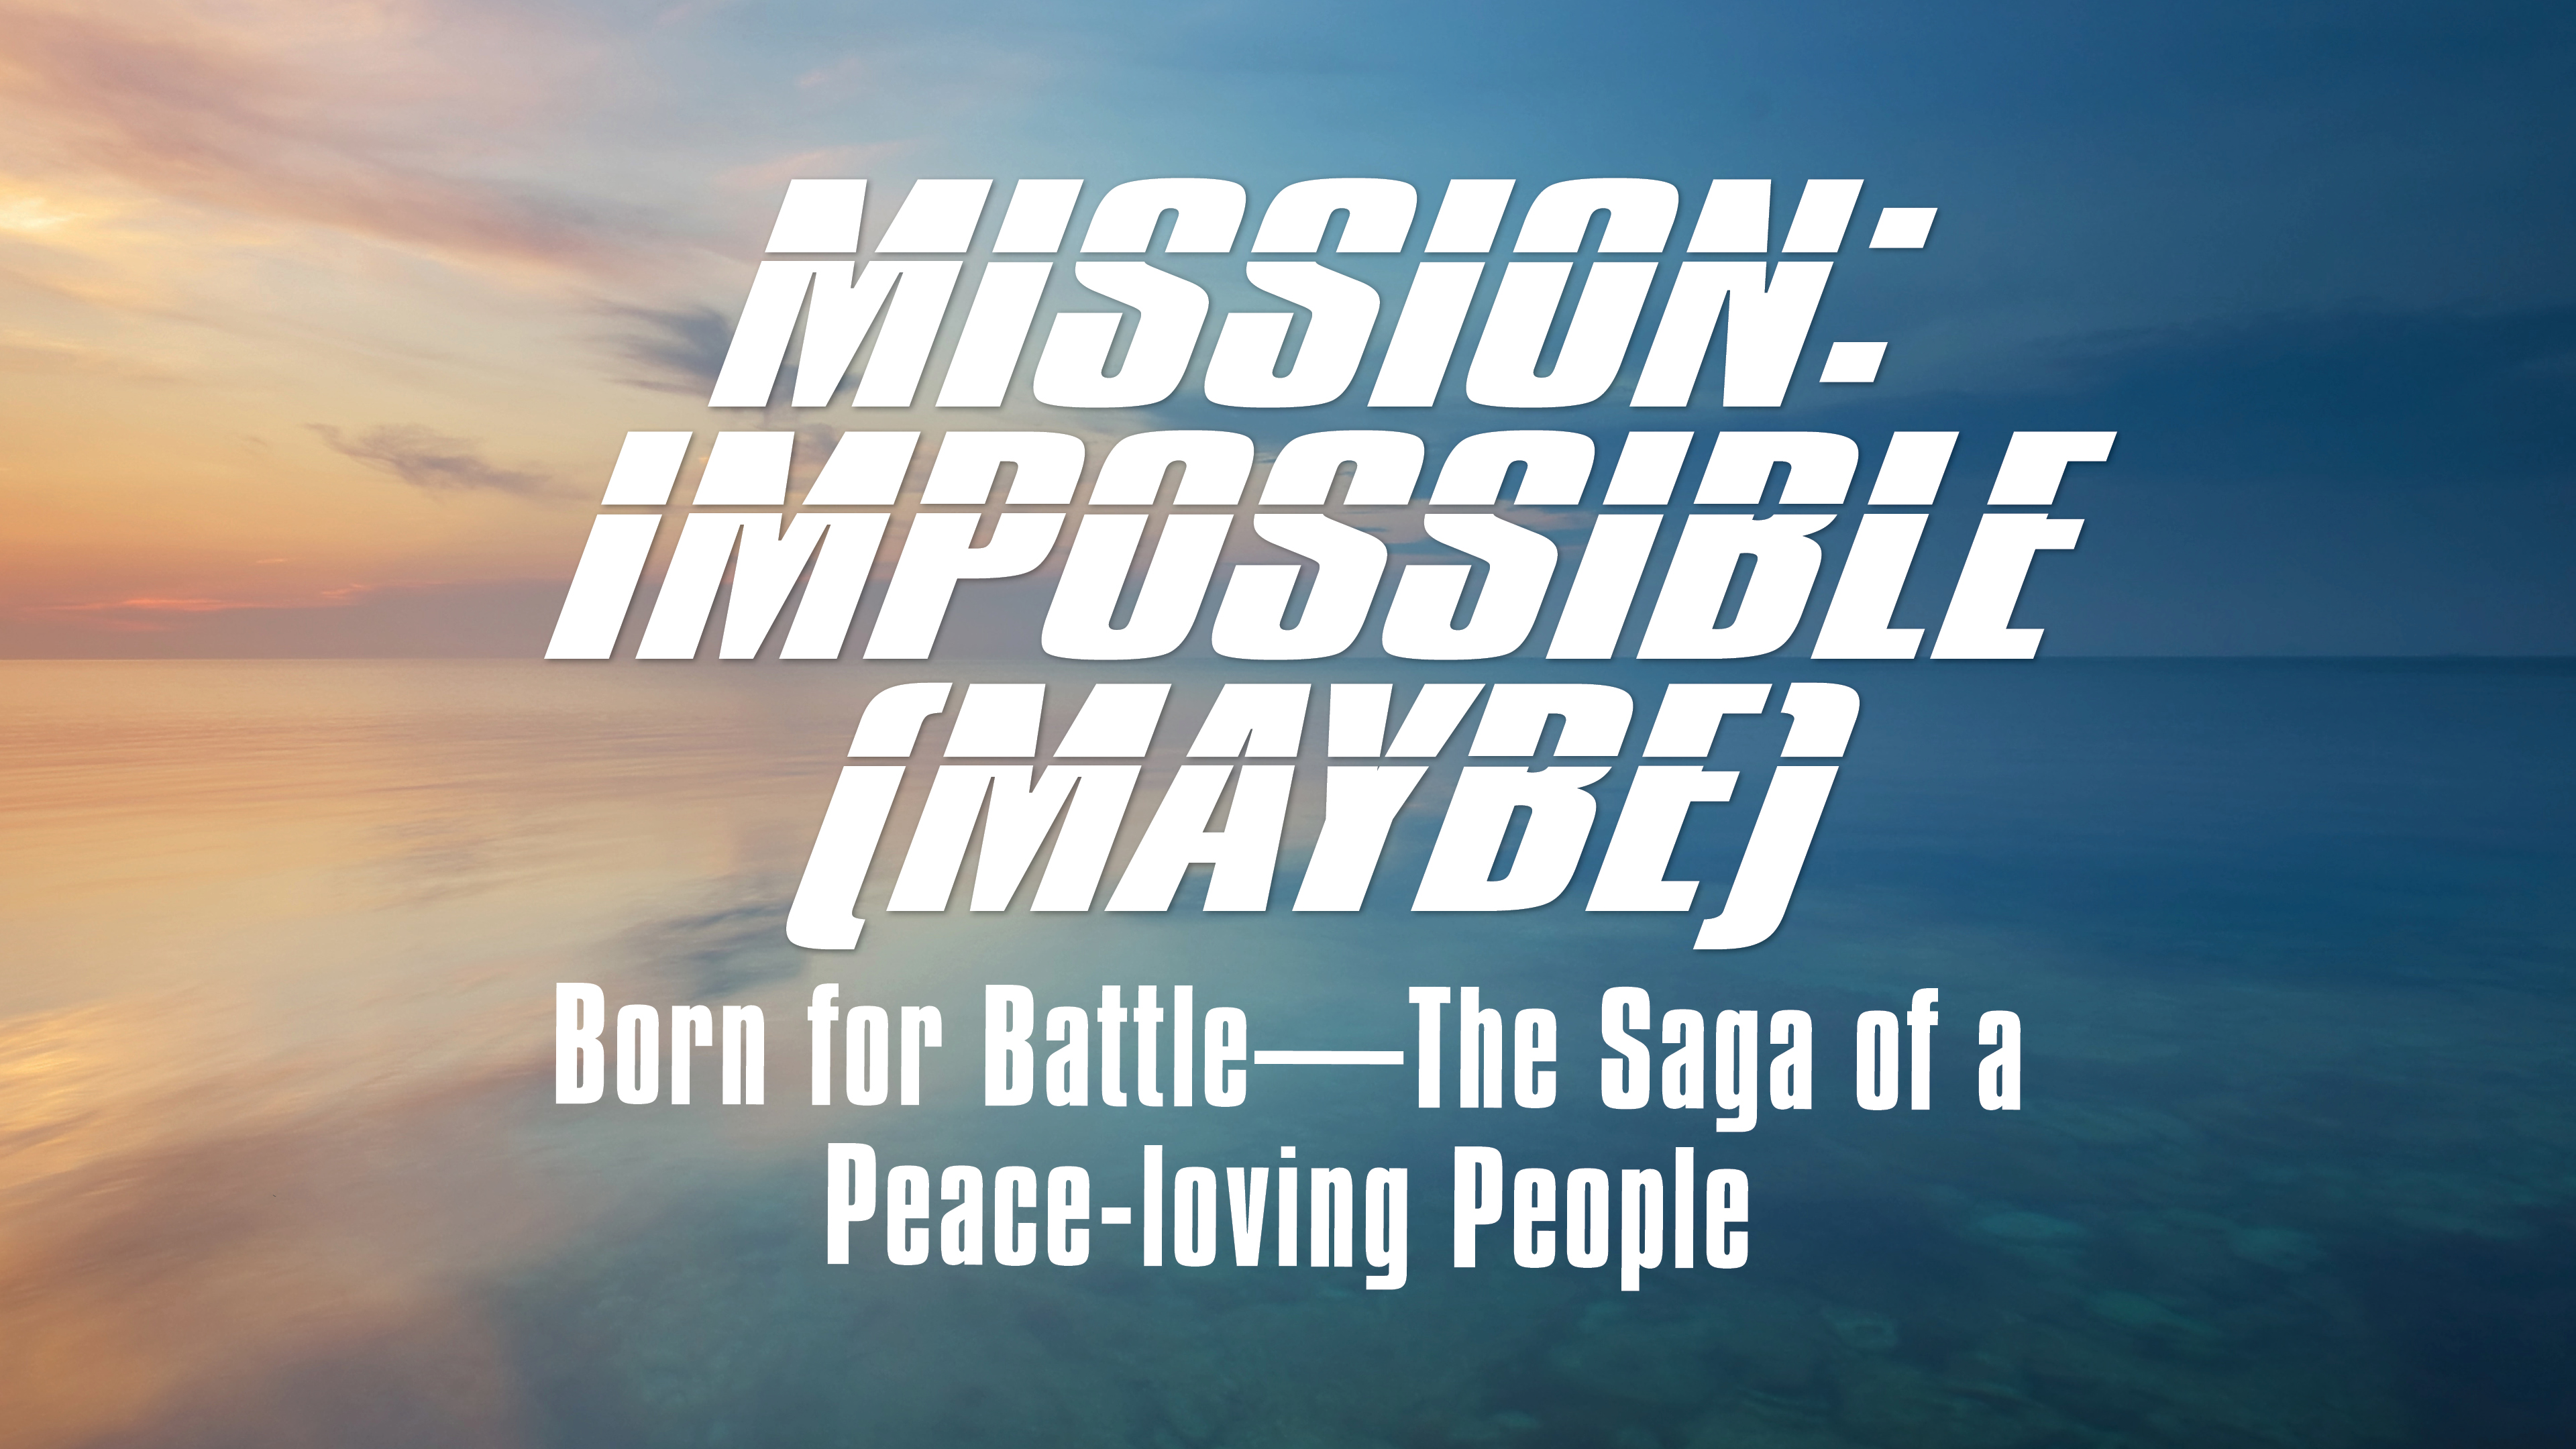 Born for Battle—The Saga of a Peace-loving People